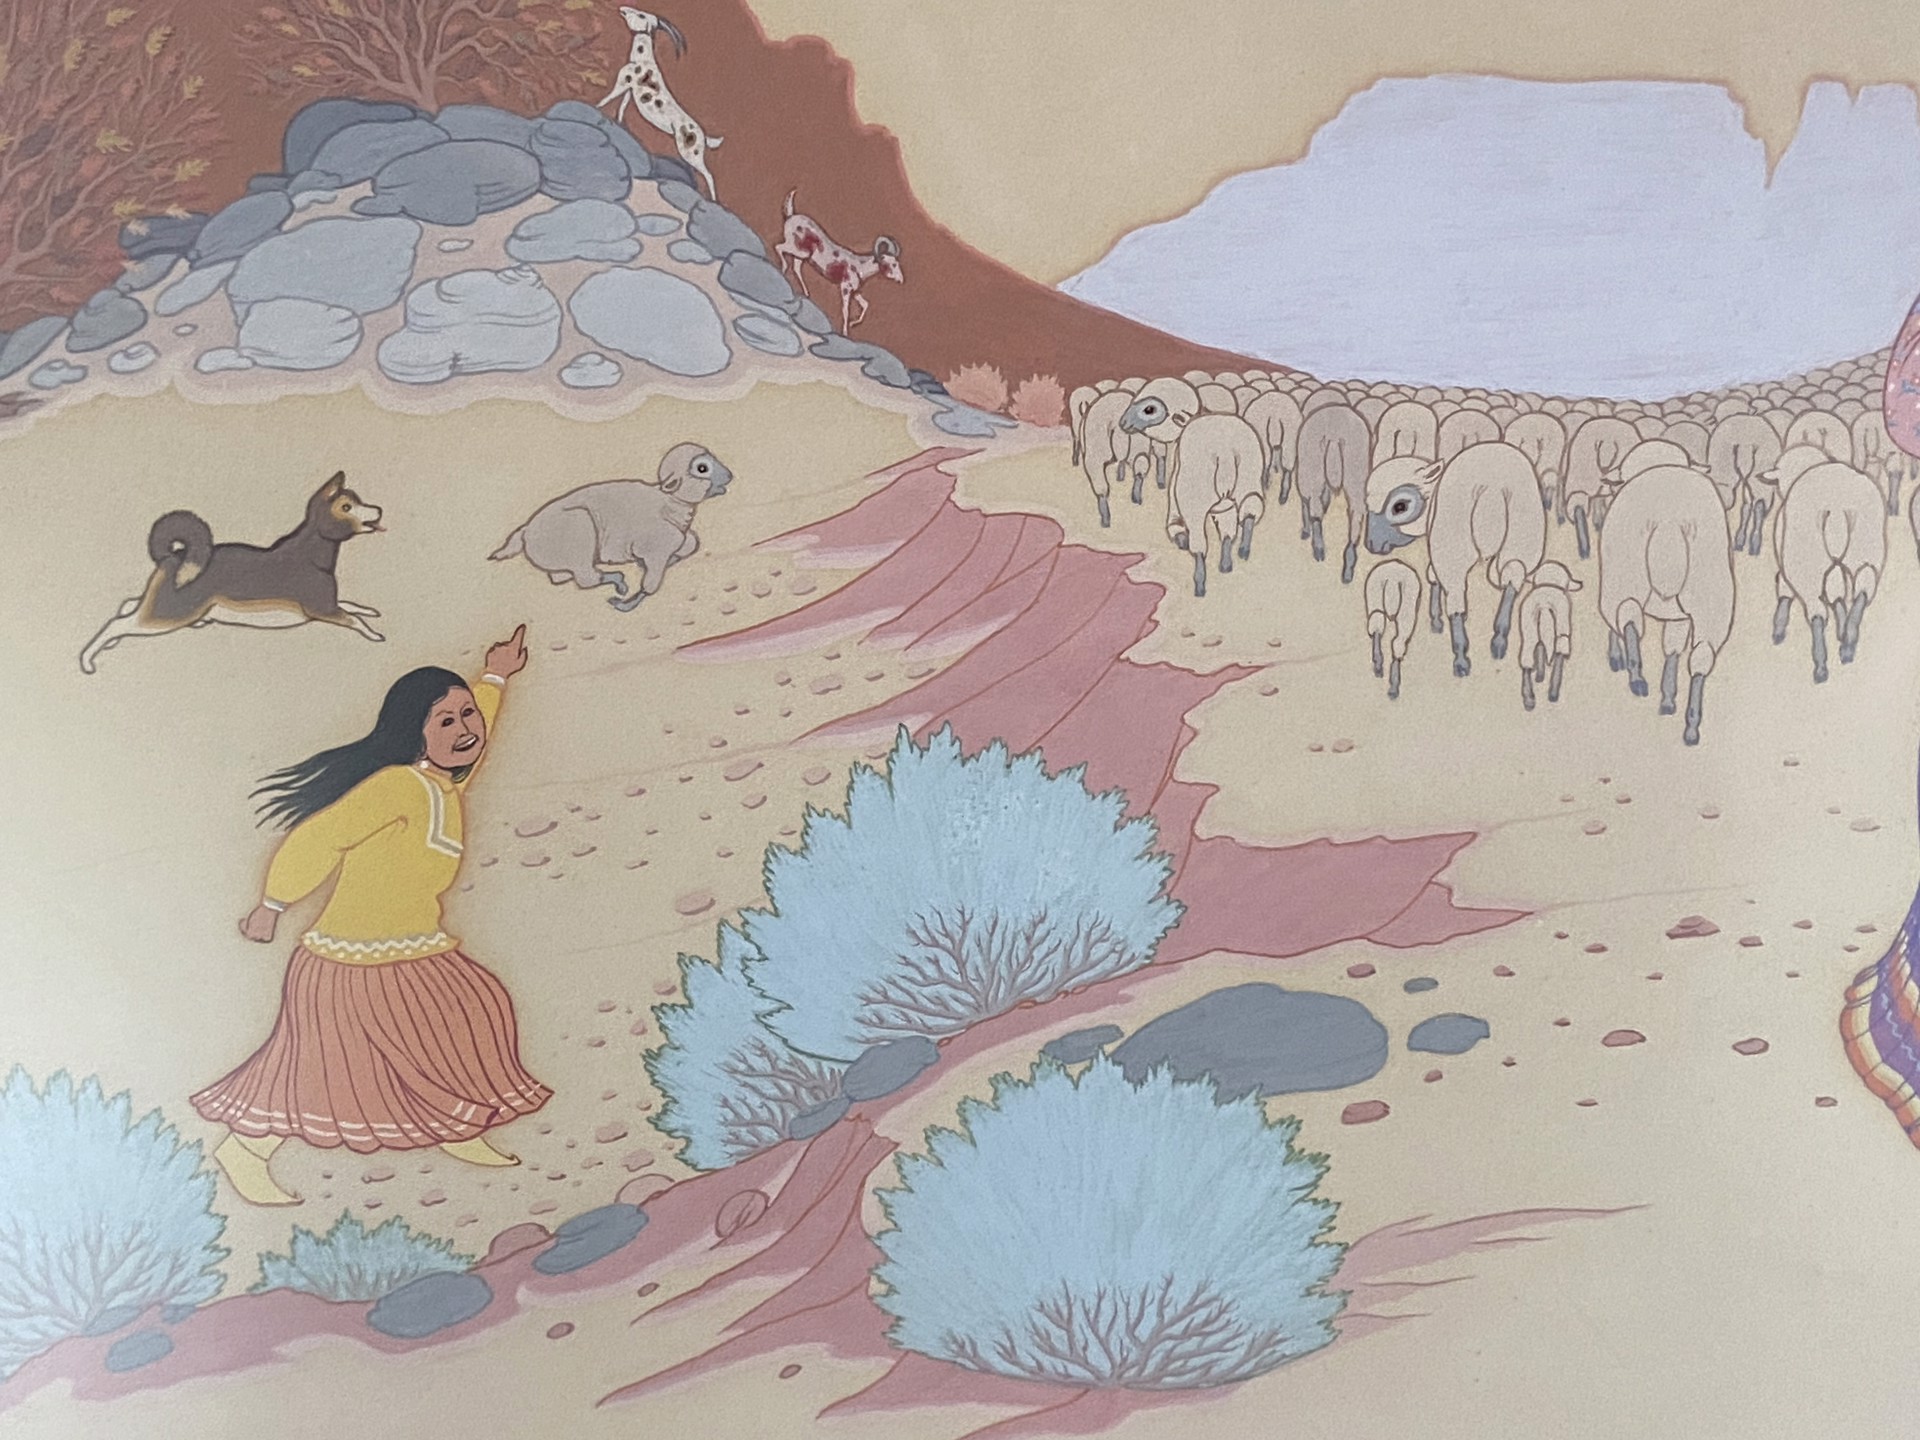 Jicarilla Apache Family Herding Sheep by Allan Houser